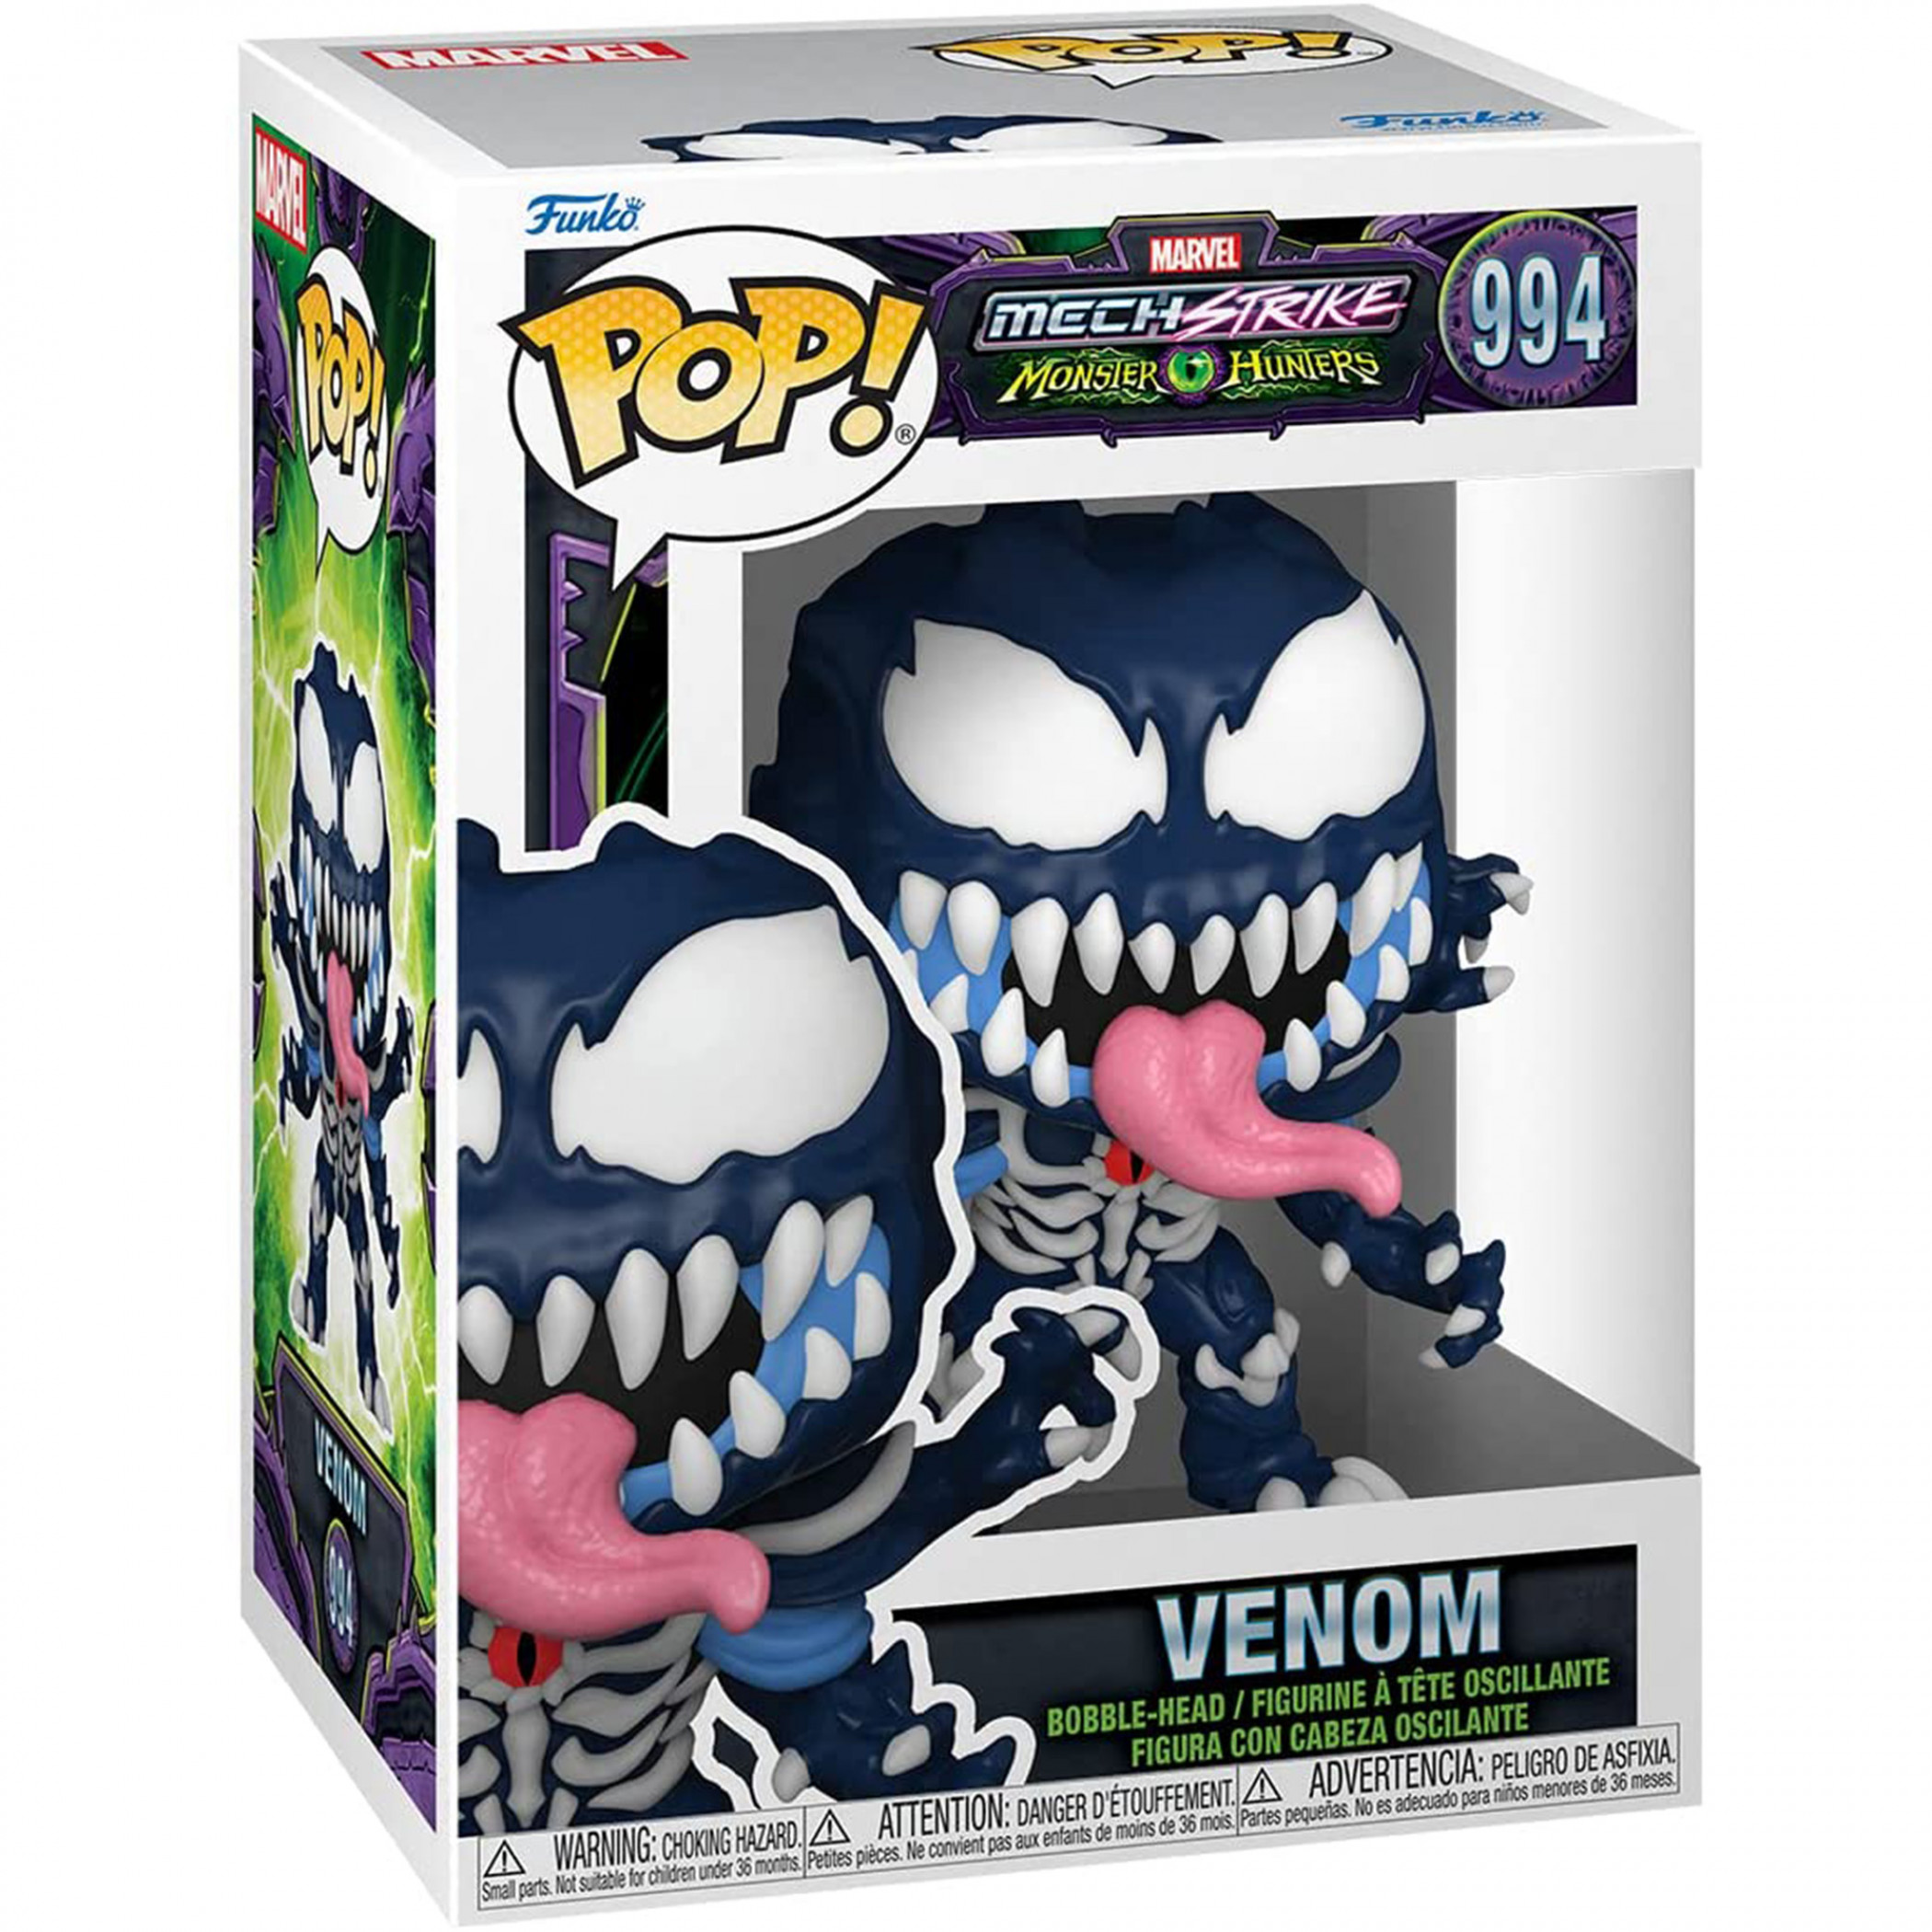 Marvel Comics Venom Monster Hunters Funko Pop! Vinyl Figure